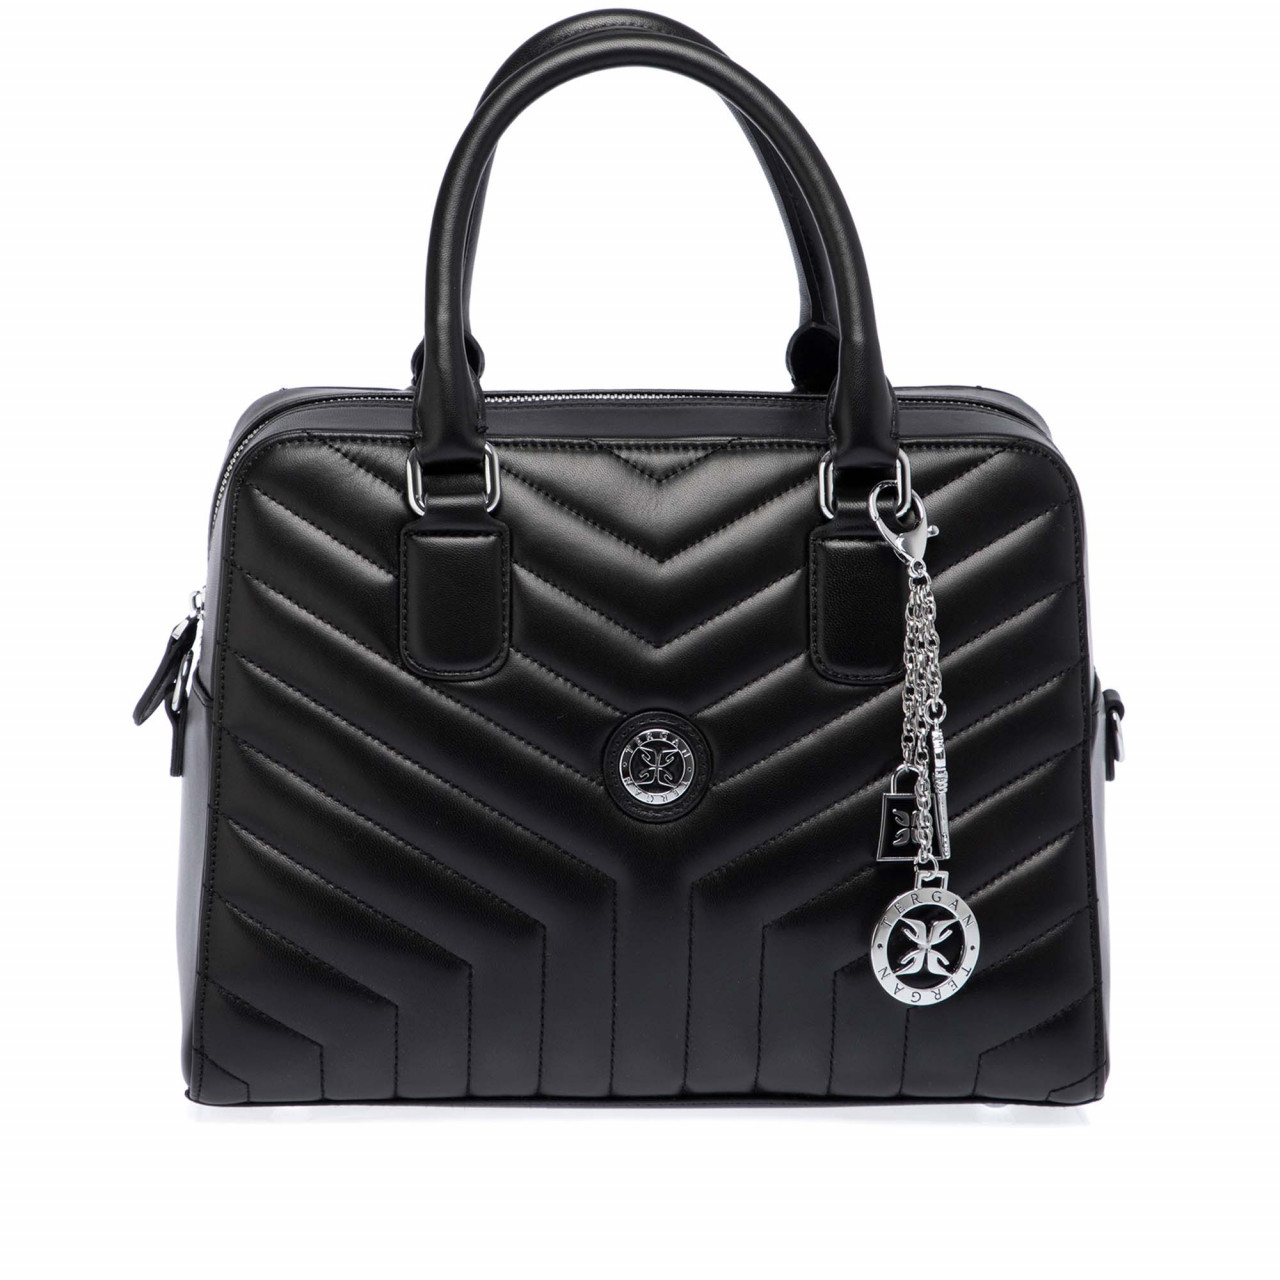 Women's briefcase type bag